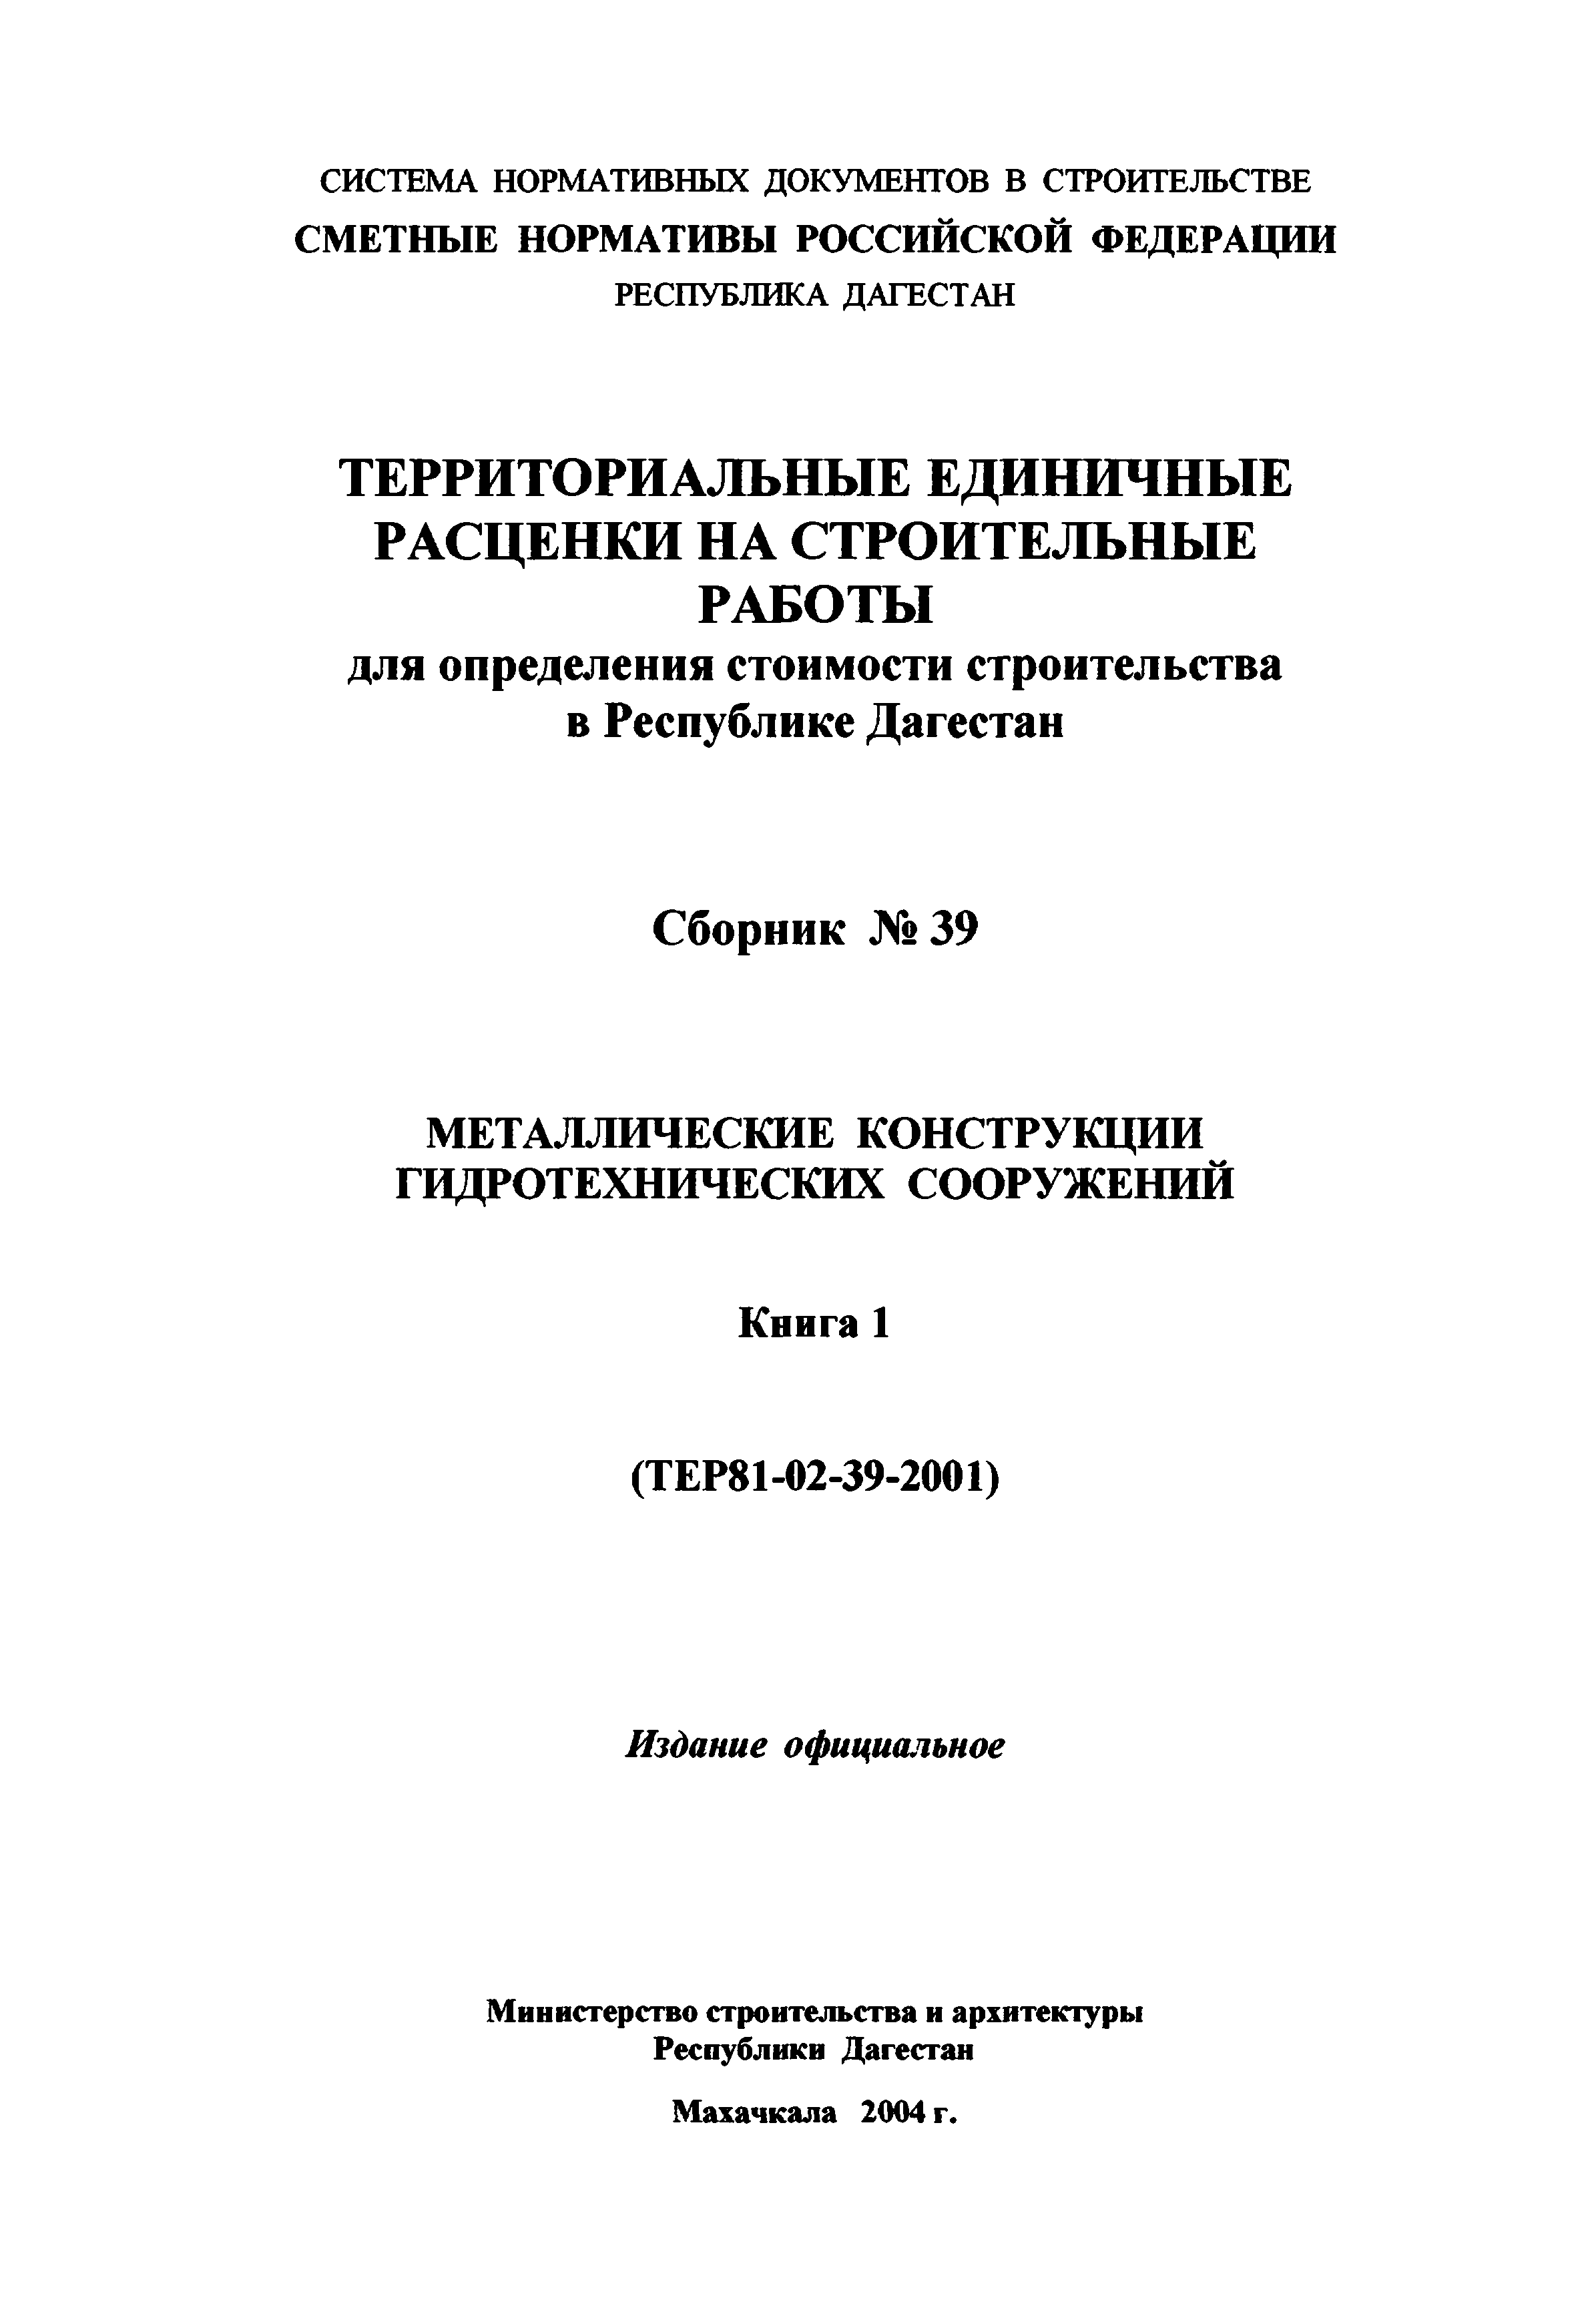 ТЕР Республика Дагестан 2001-39